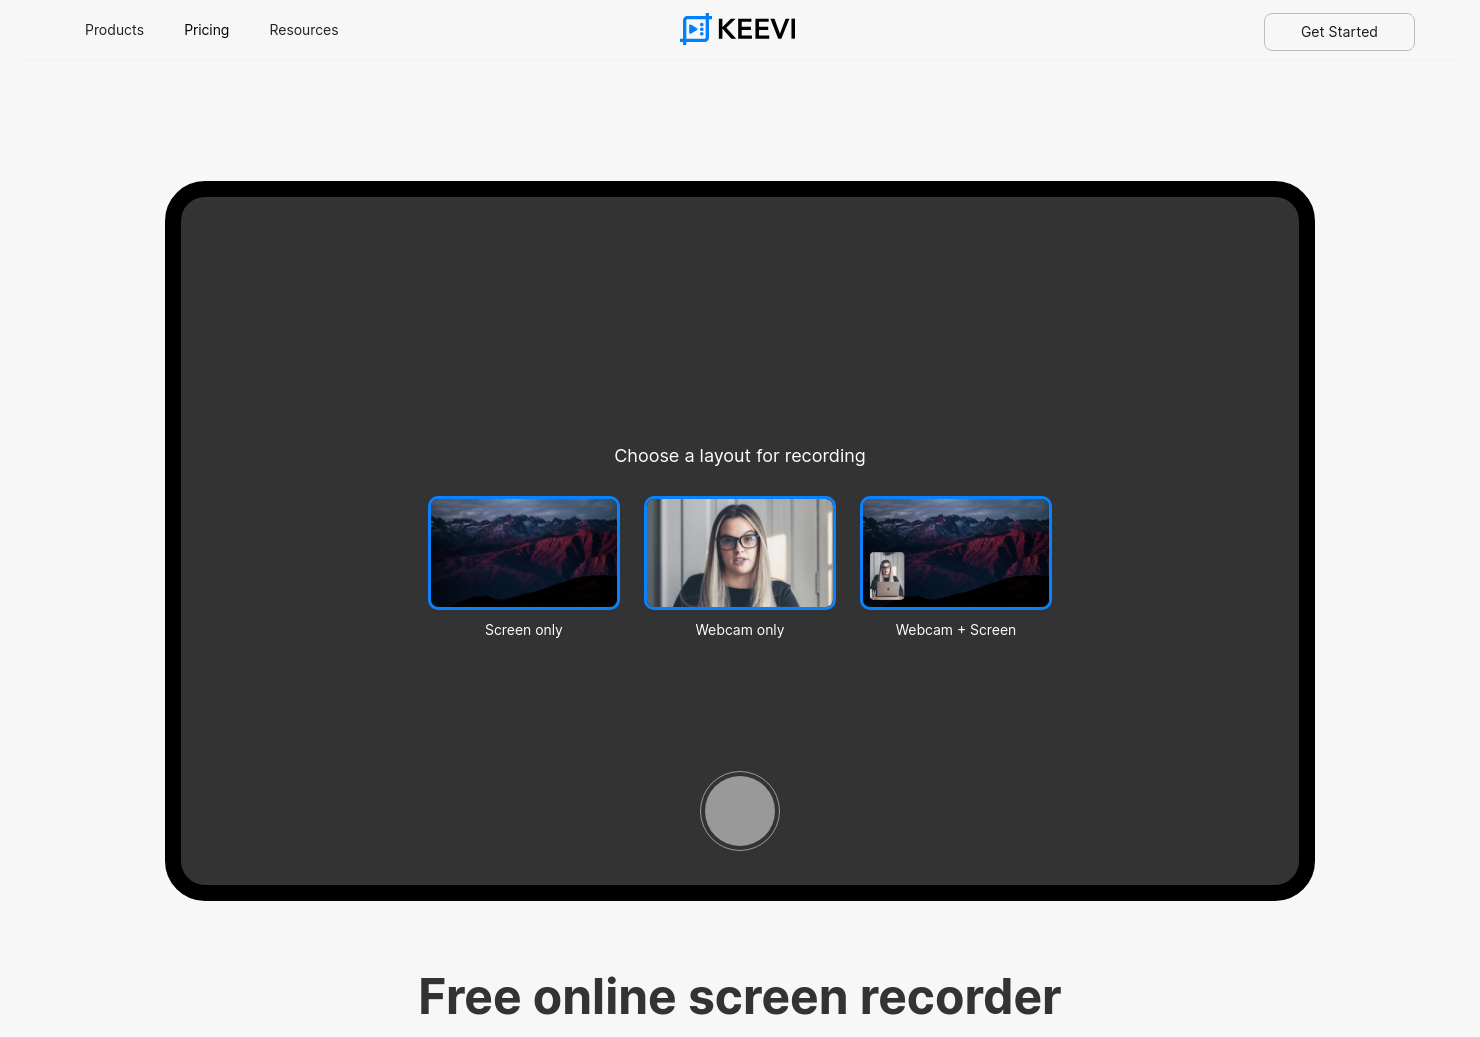 Record Webcam + Screen > Share